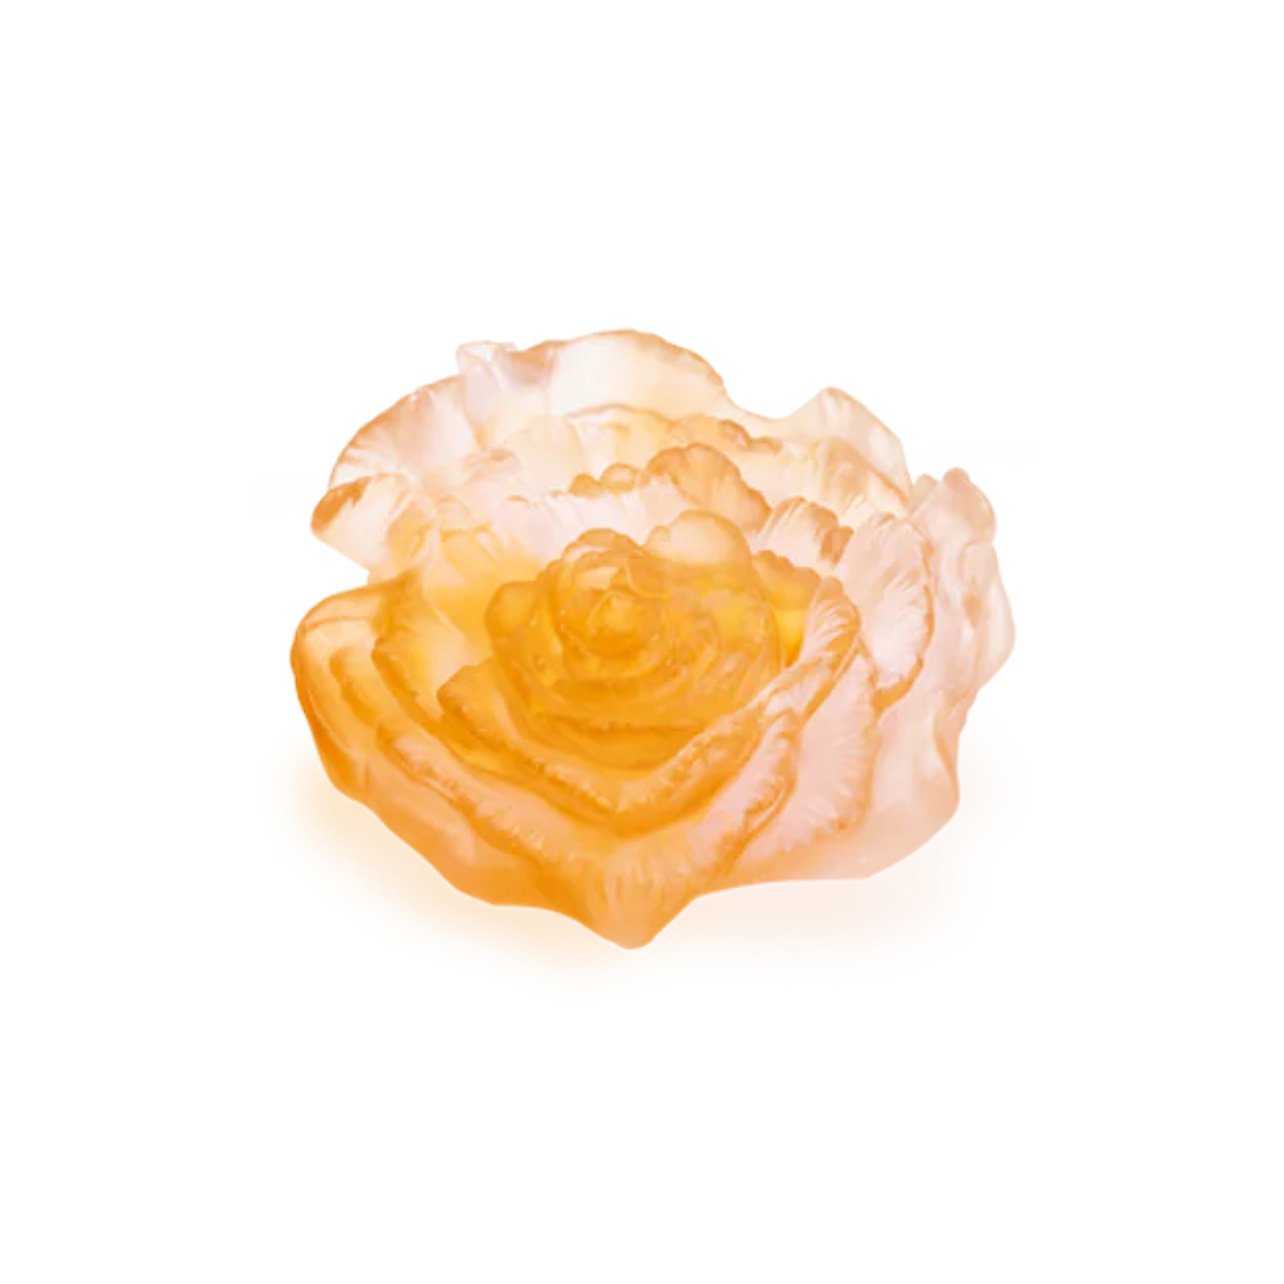 Daum Rose Royale Collection decorative glass rose flower in orange